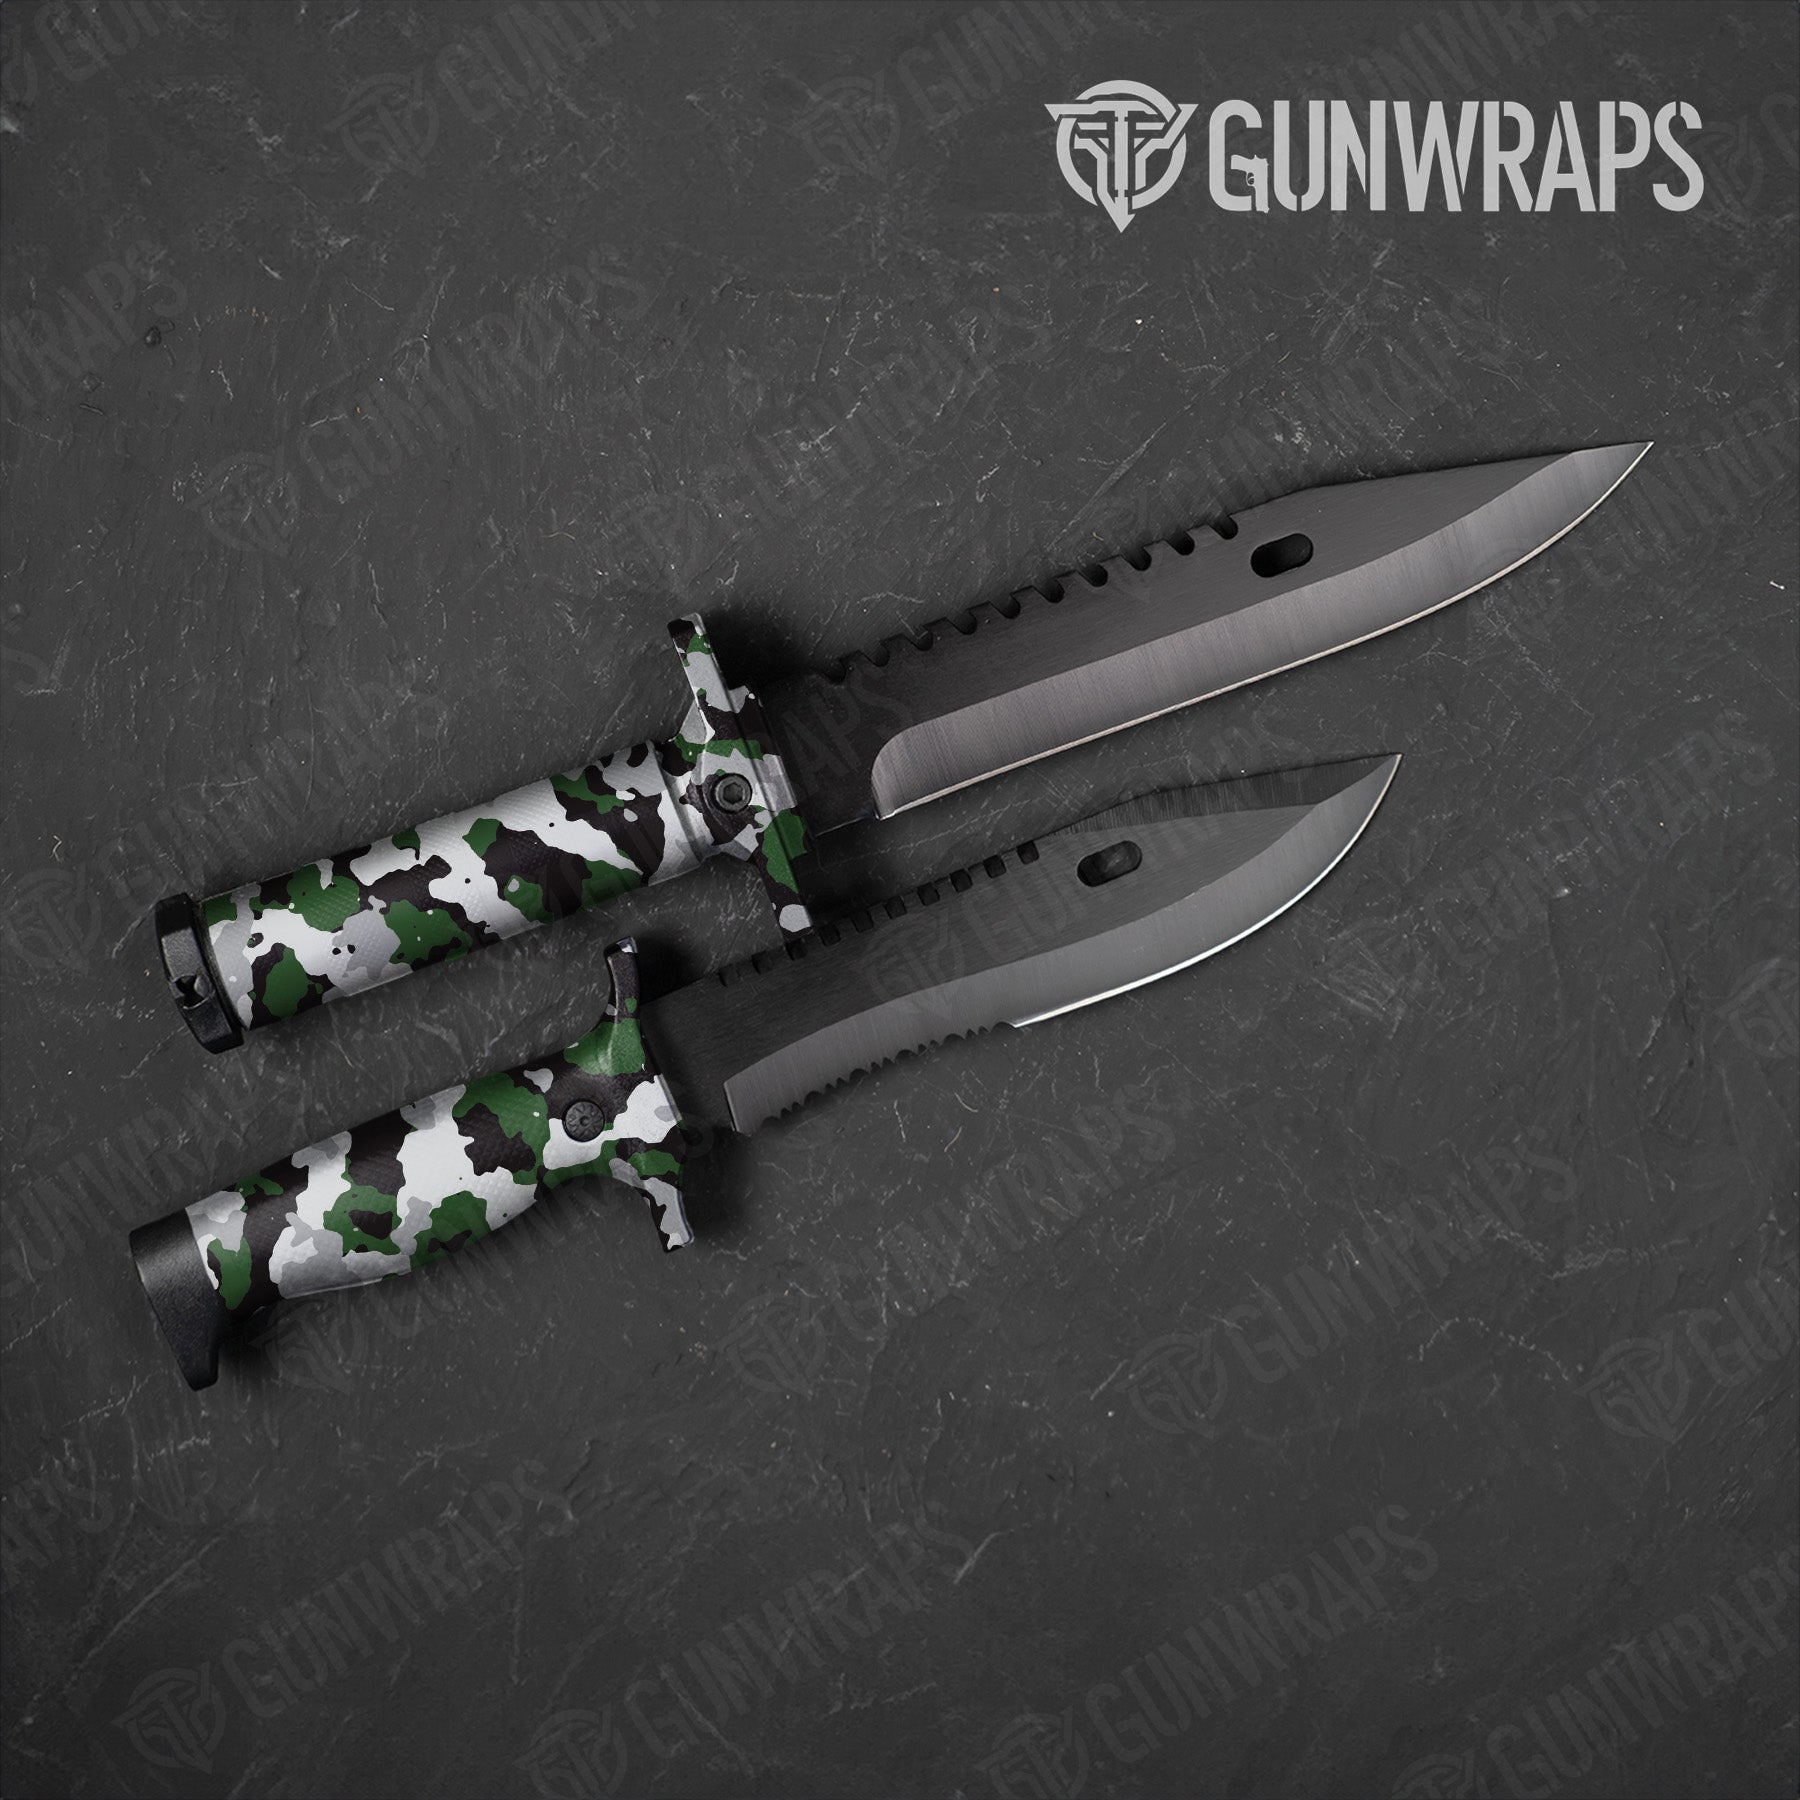 Cumulus Green Tiger Camo Knife Gear Skin Vinyl Wrap